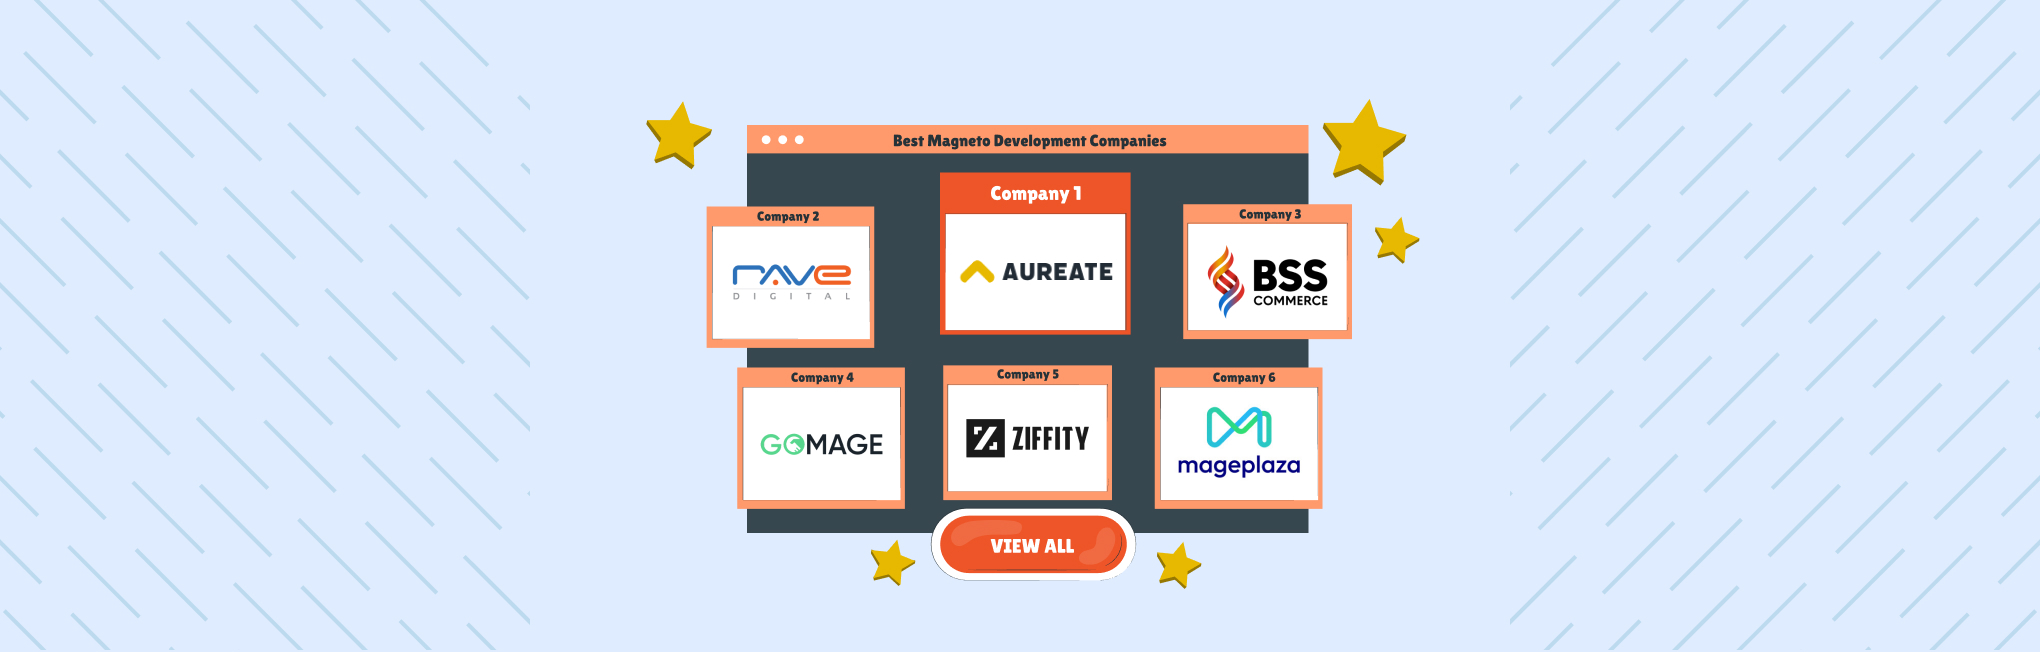 11 Best Magento Development Companies